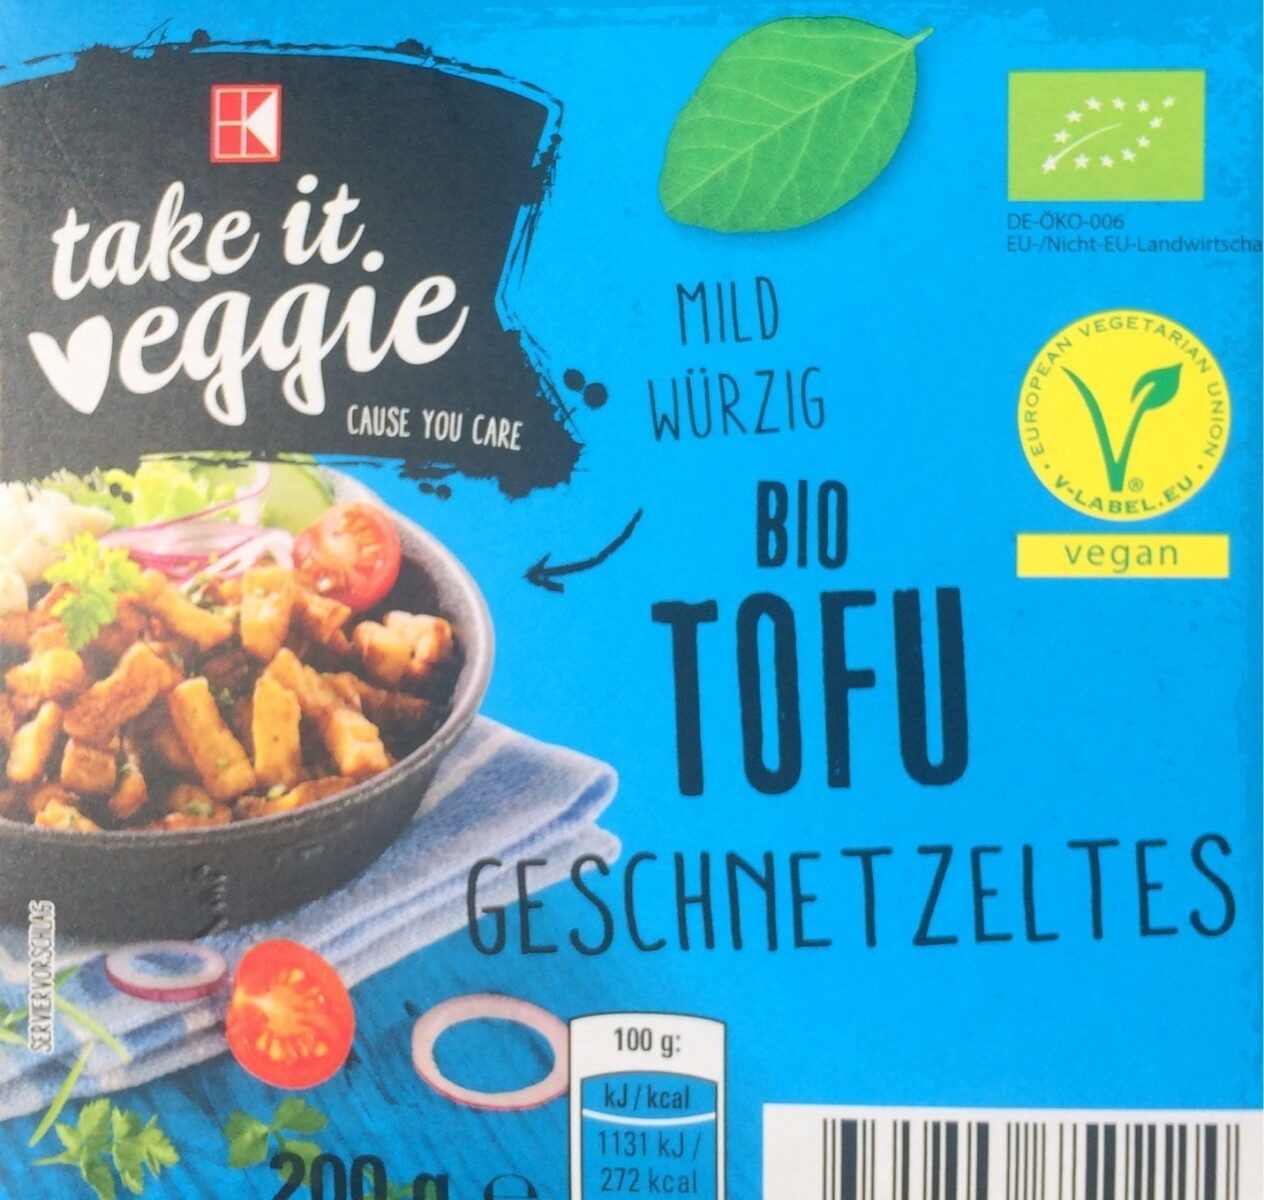 K-take it Veggie Bio Tofu Geschnetzeltes - Product - de